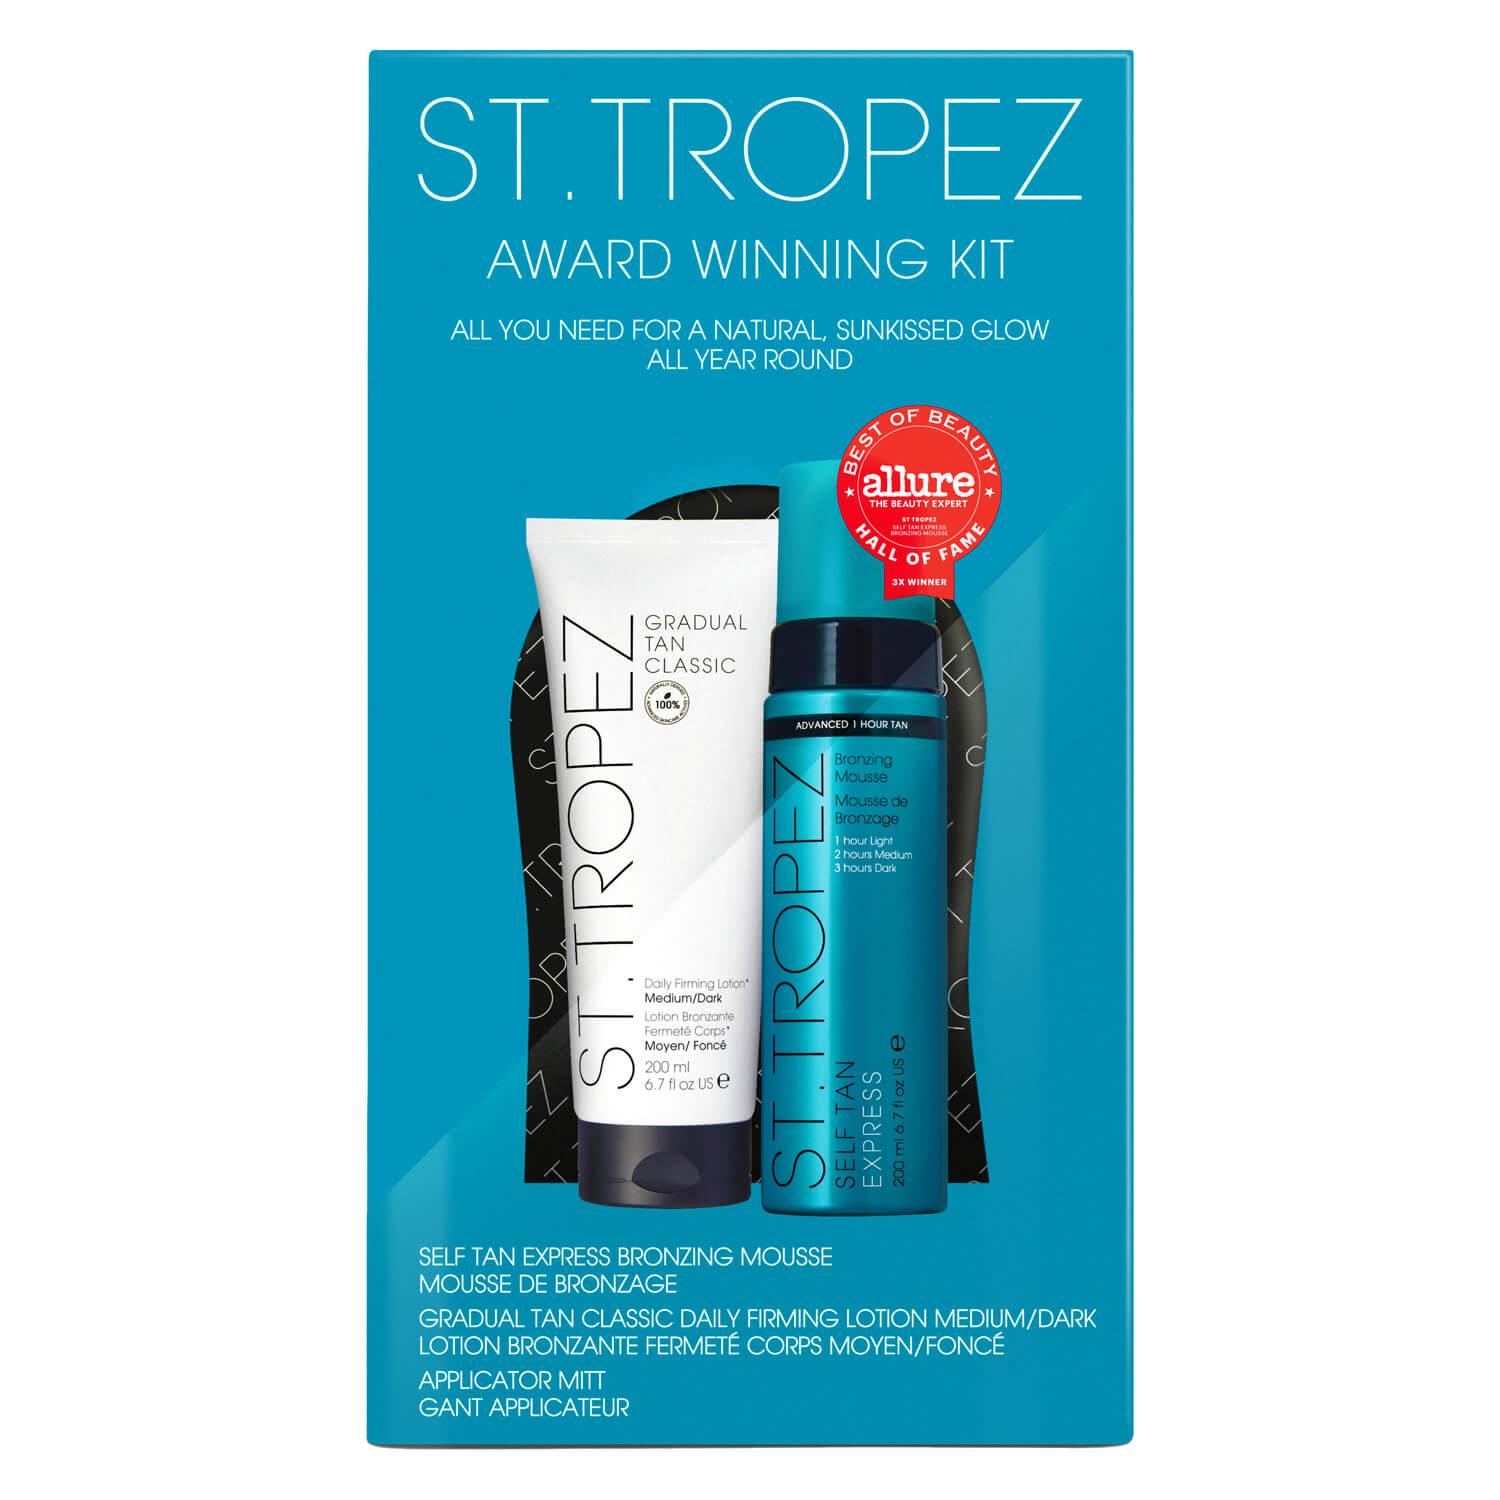 St.Tropez - Award Winning Kit